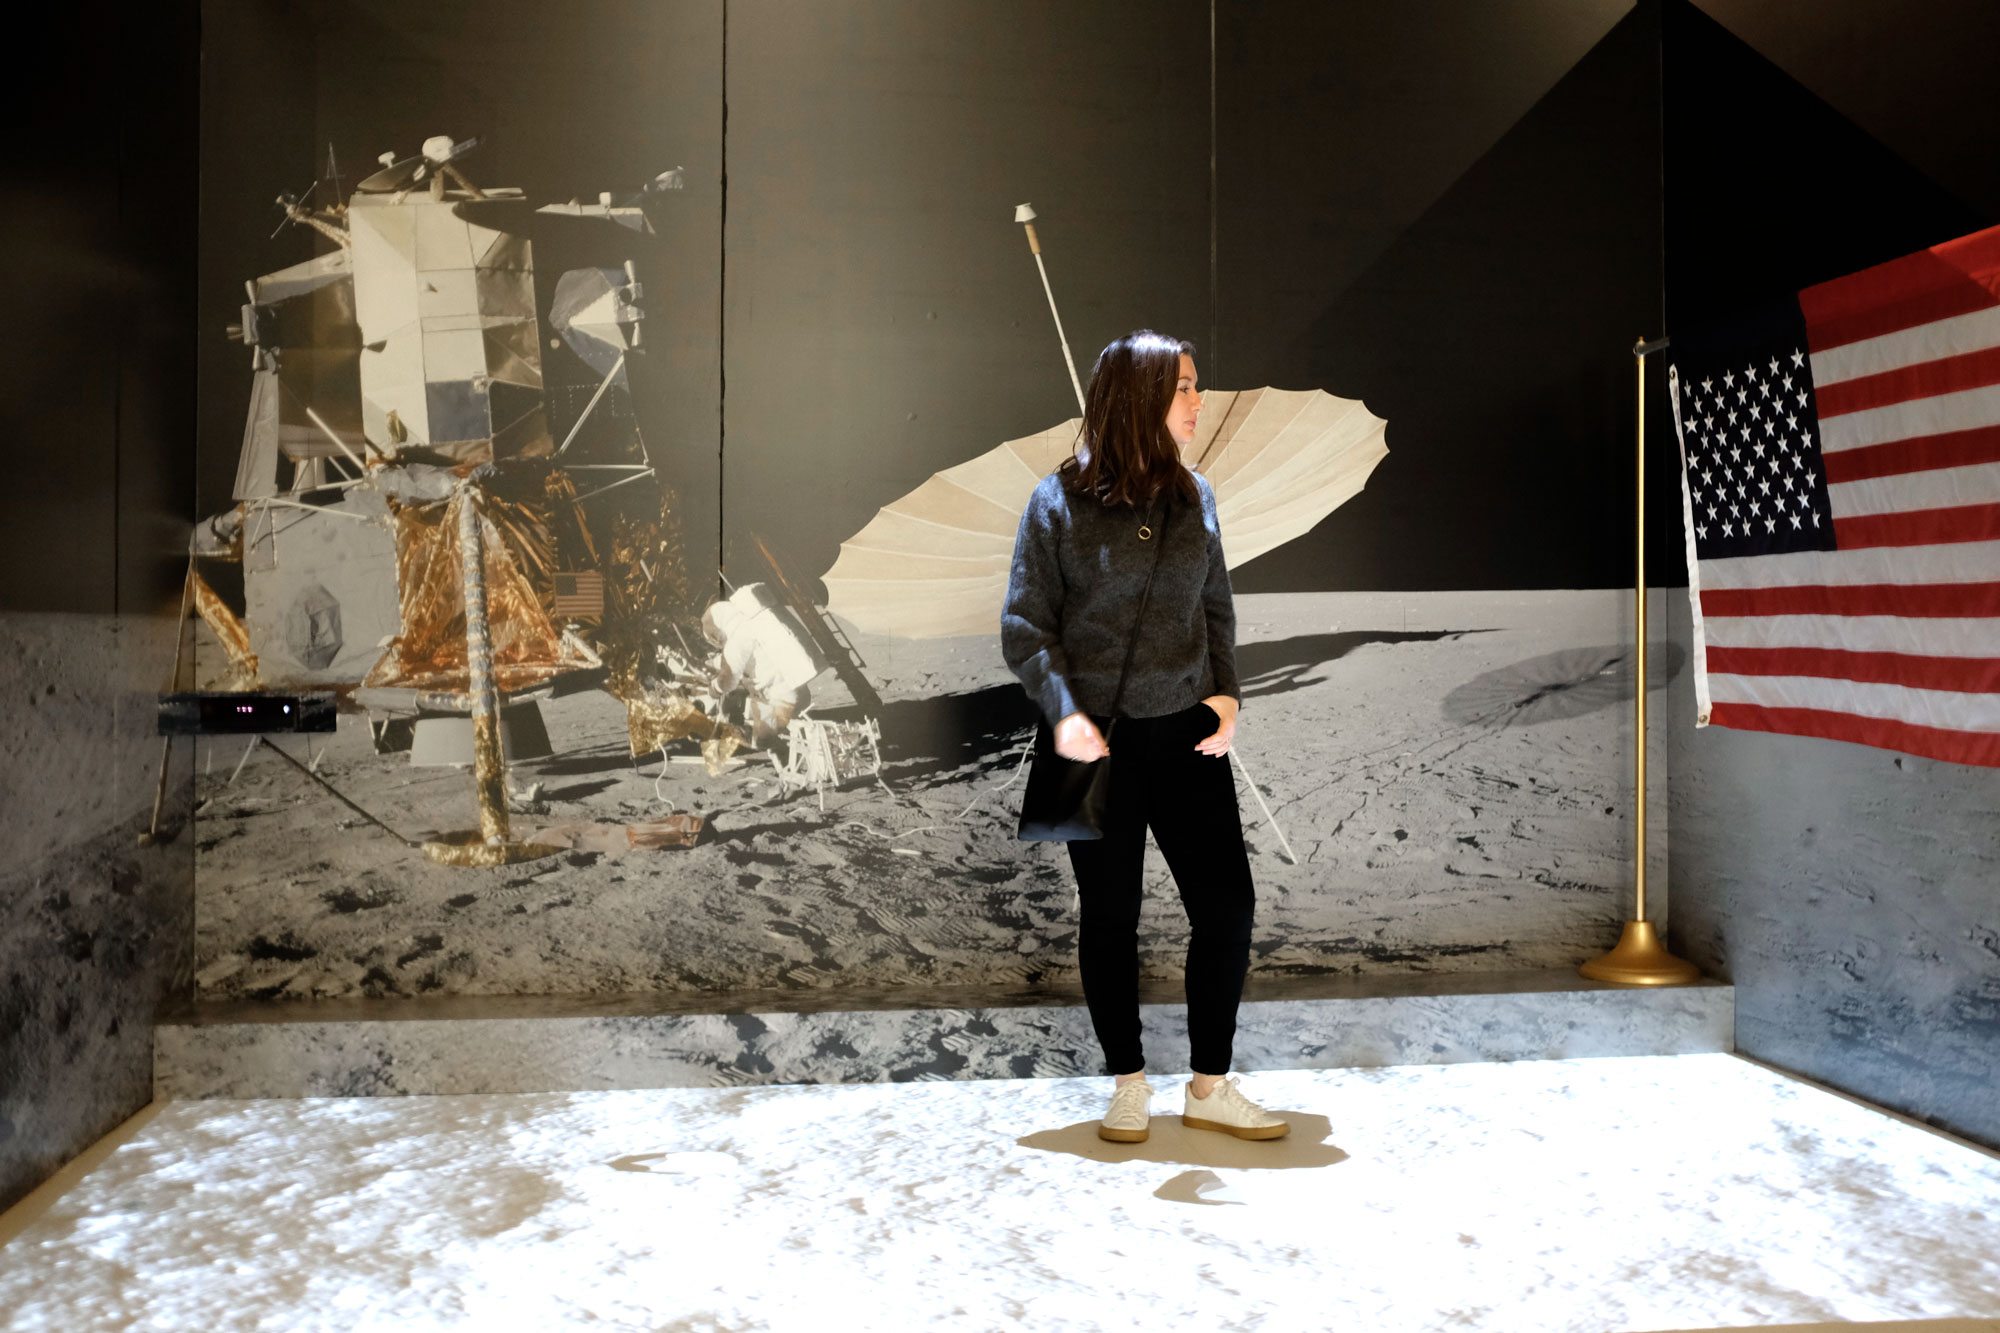 Alyssa standing on a lunar landscape in a grey sweater and black denim